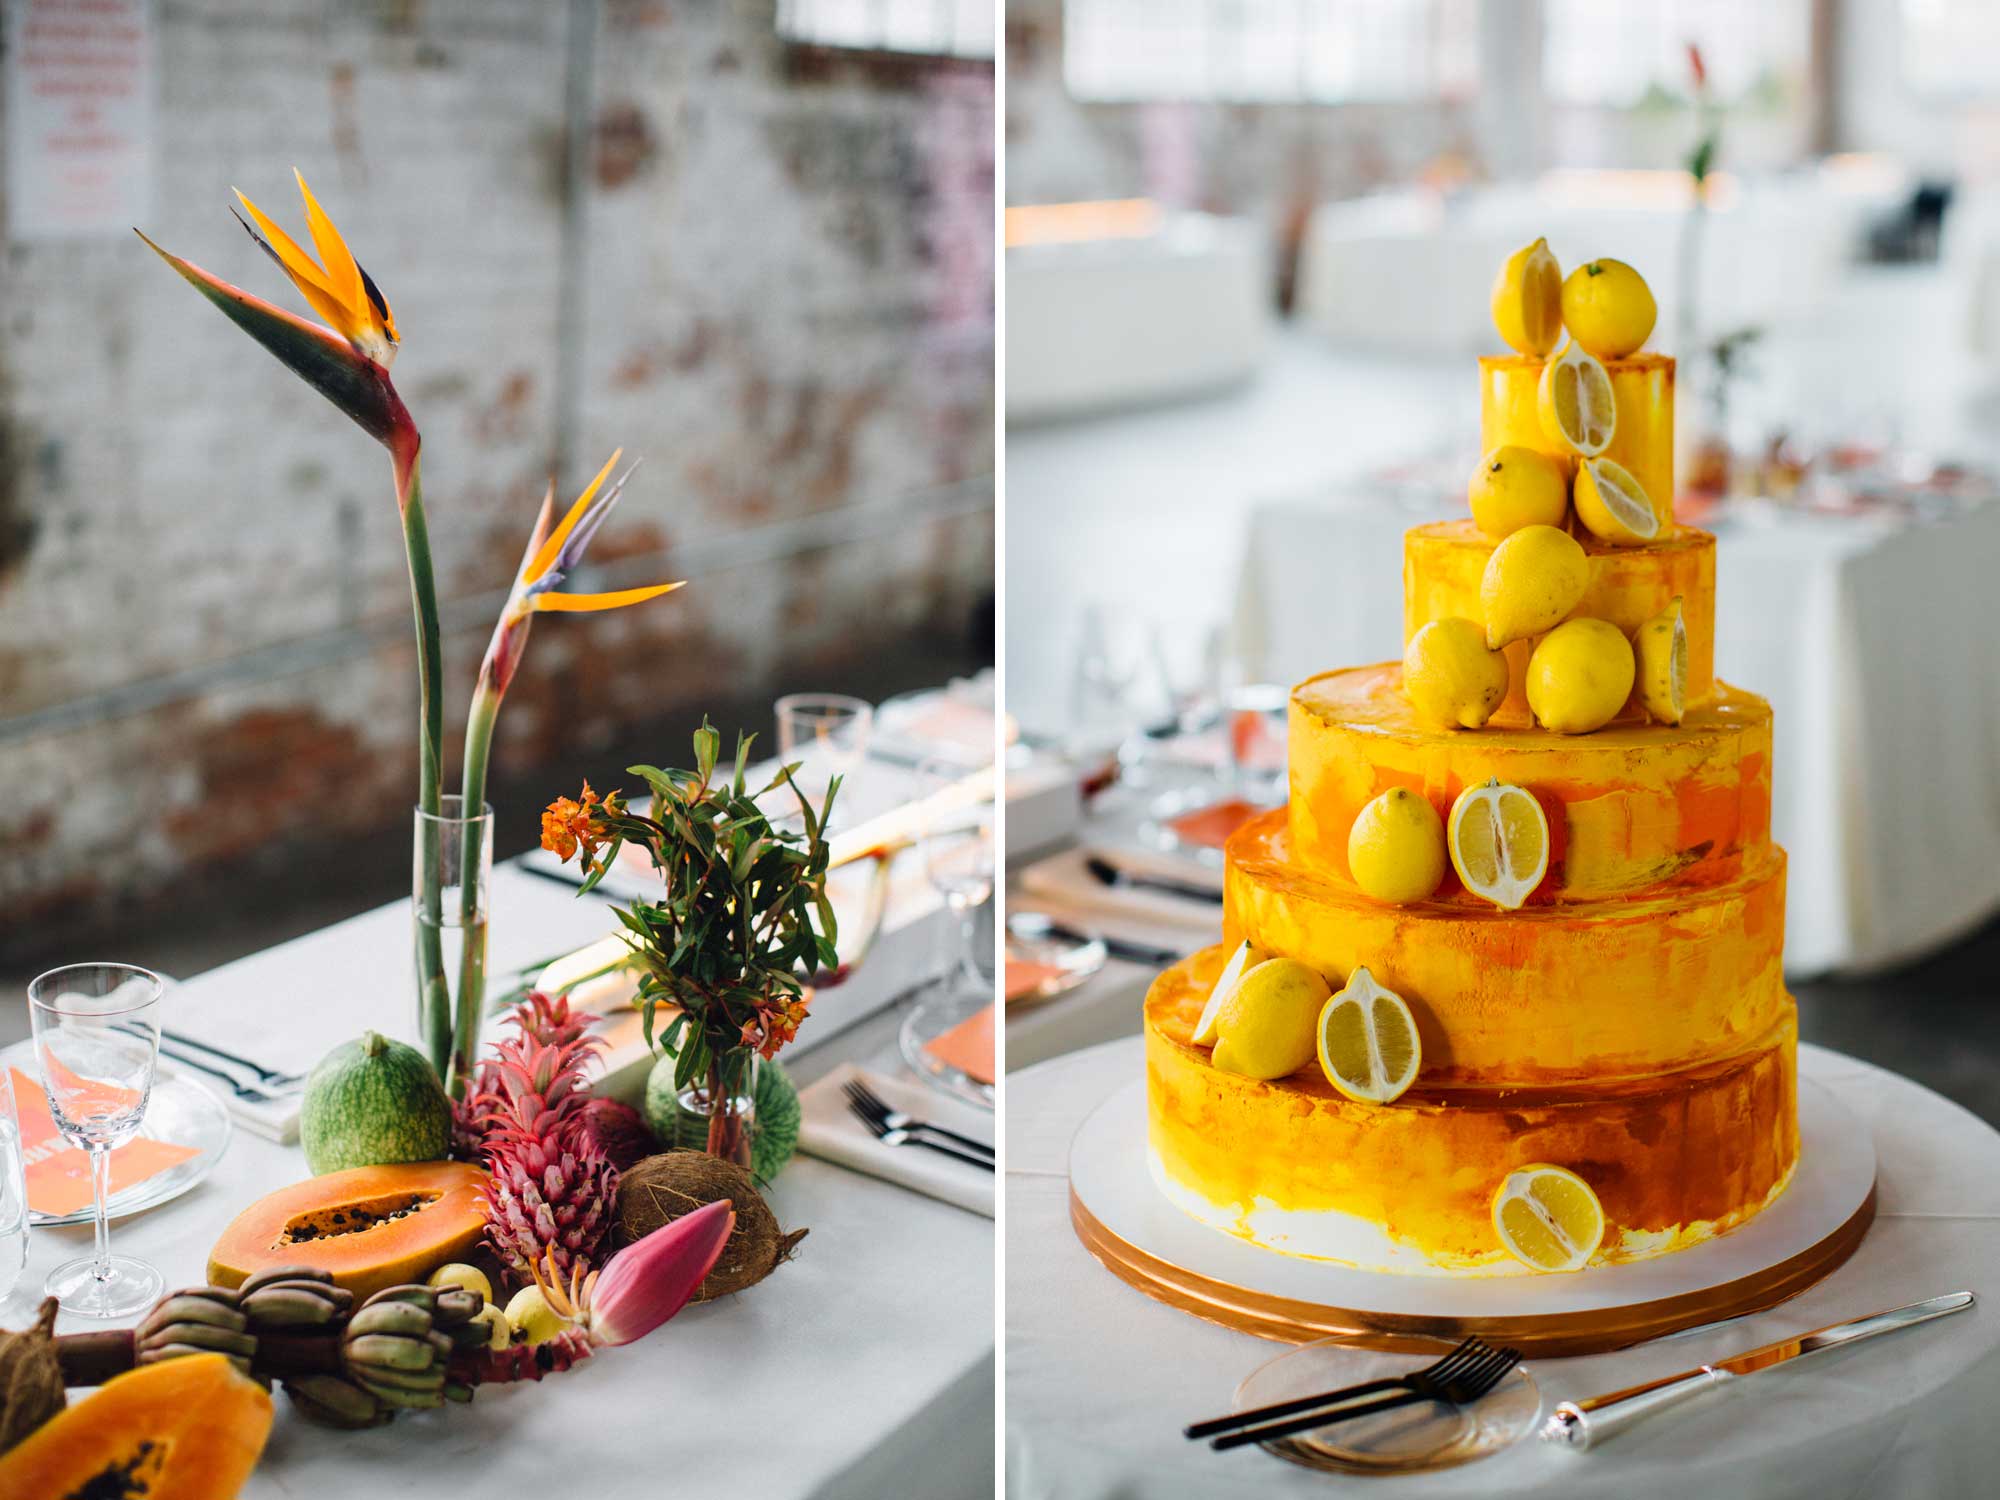 Lemon Sliced Colorful Wedding Cake with Bird of Paradise Flower Arrangements 